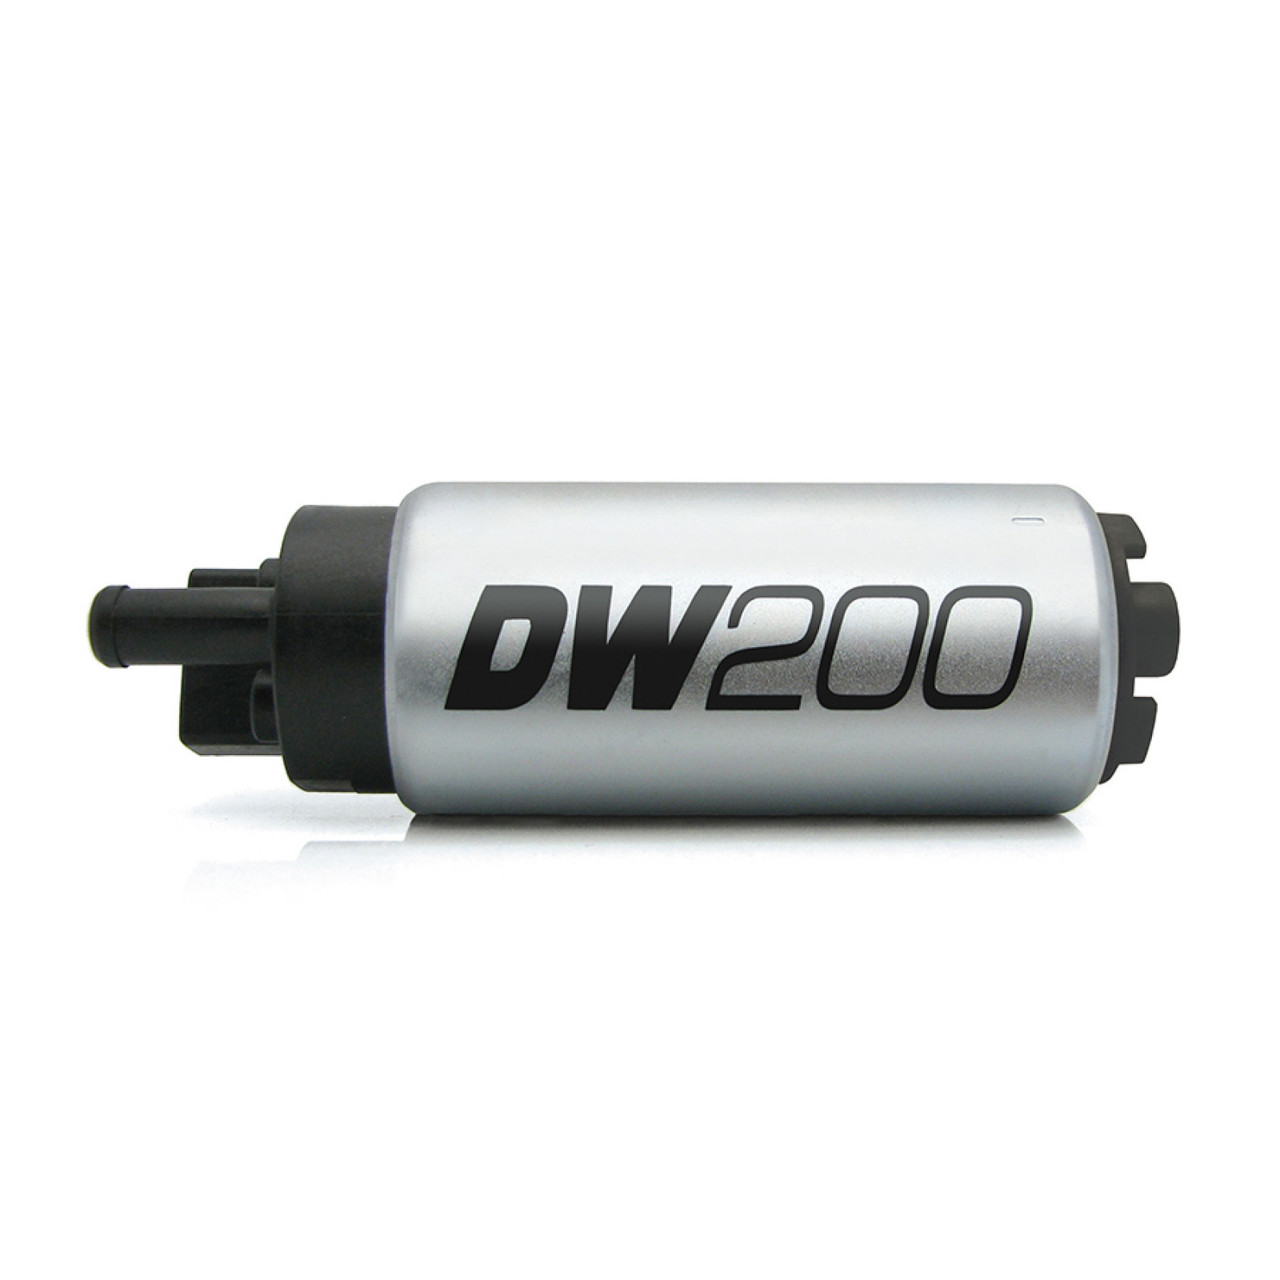 Deatschwerks DW200 255lph Fuel Pump for 97-07 Subaru Forester, 93-07 Impreza, and 90-99/05-07 Legacy GT (DEW-9-201-0791)